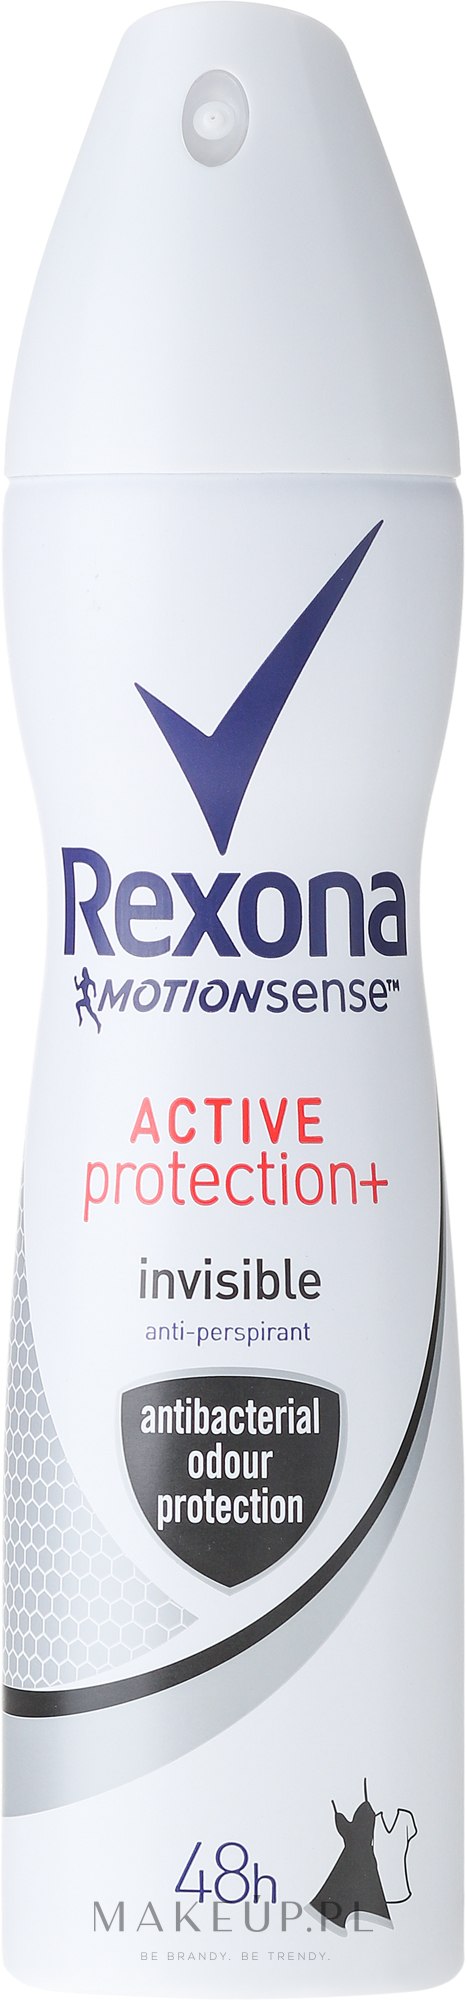 Antybakteryjny antyperspirant w sprayu - Rexona Motionsense Active Protection+ Invisible Anti-Perspirant — Zdjęcie 150 ml